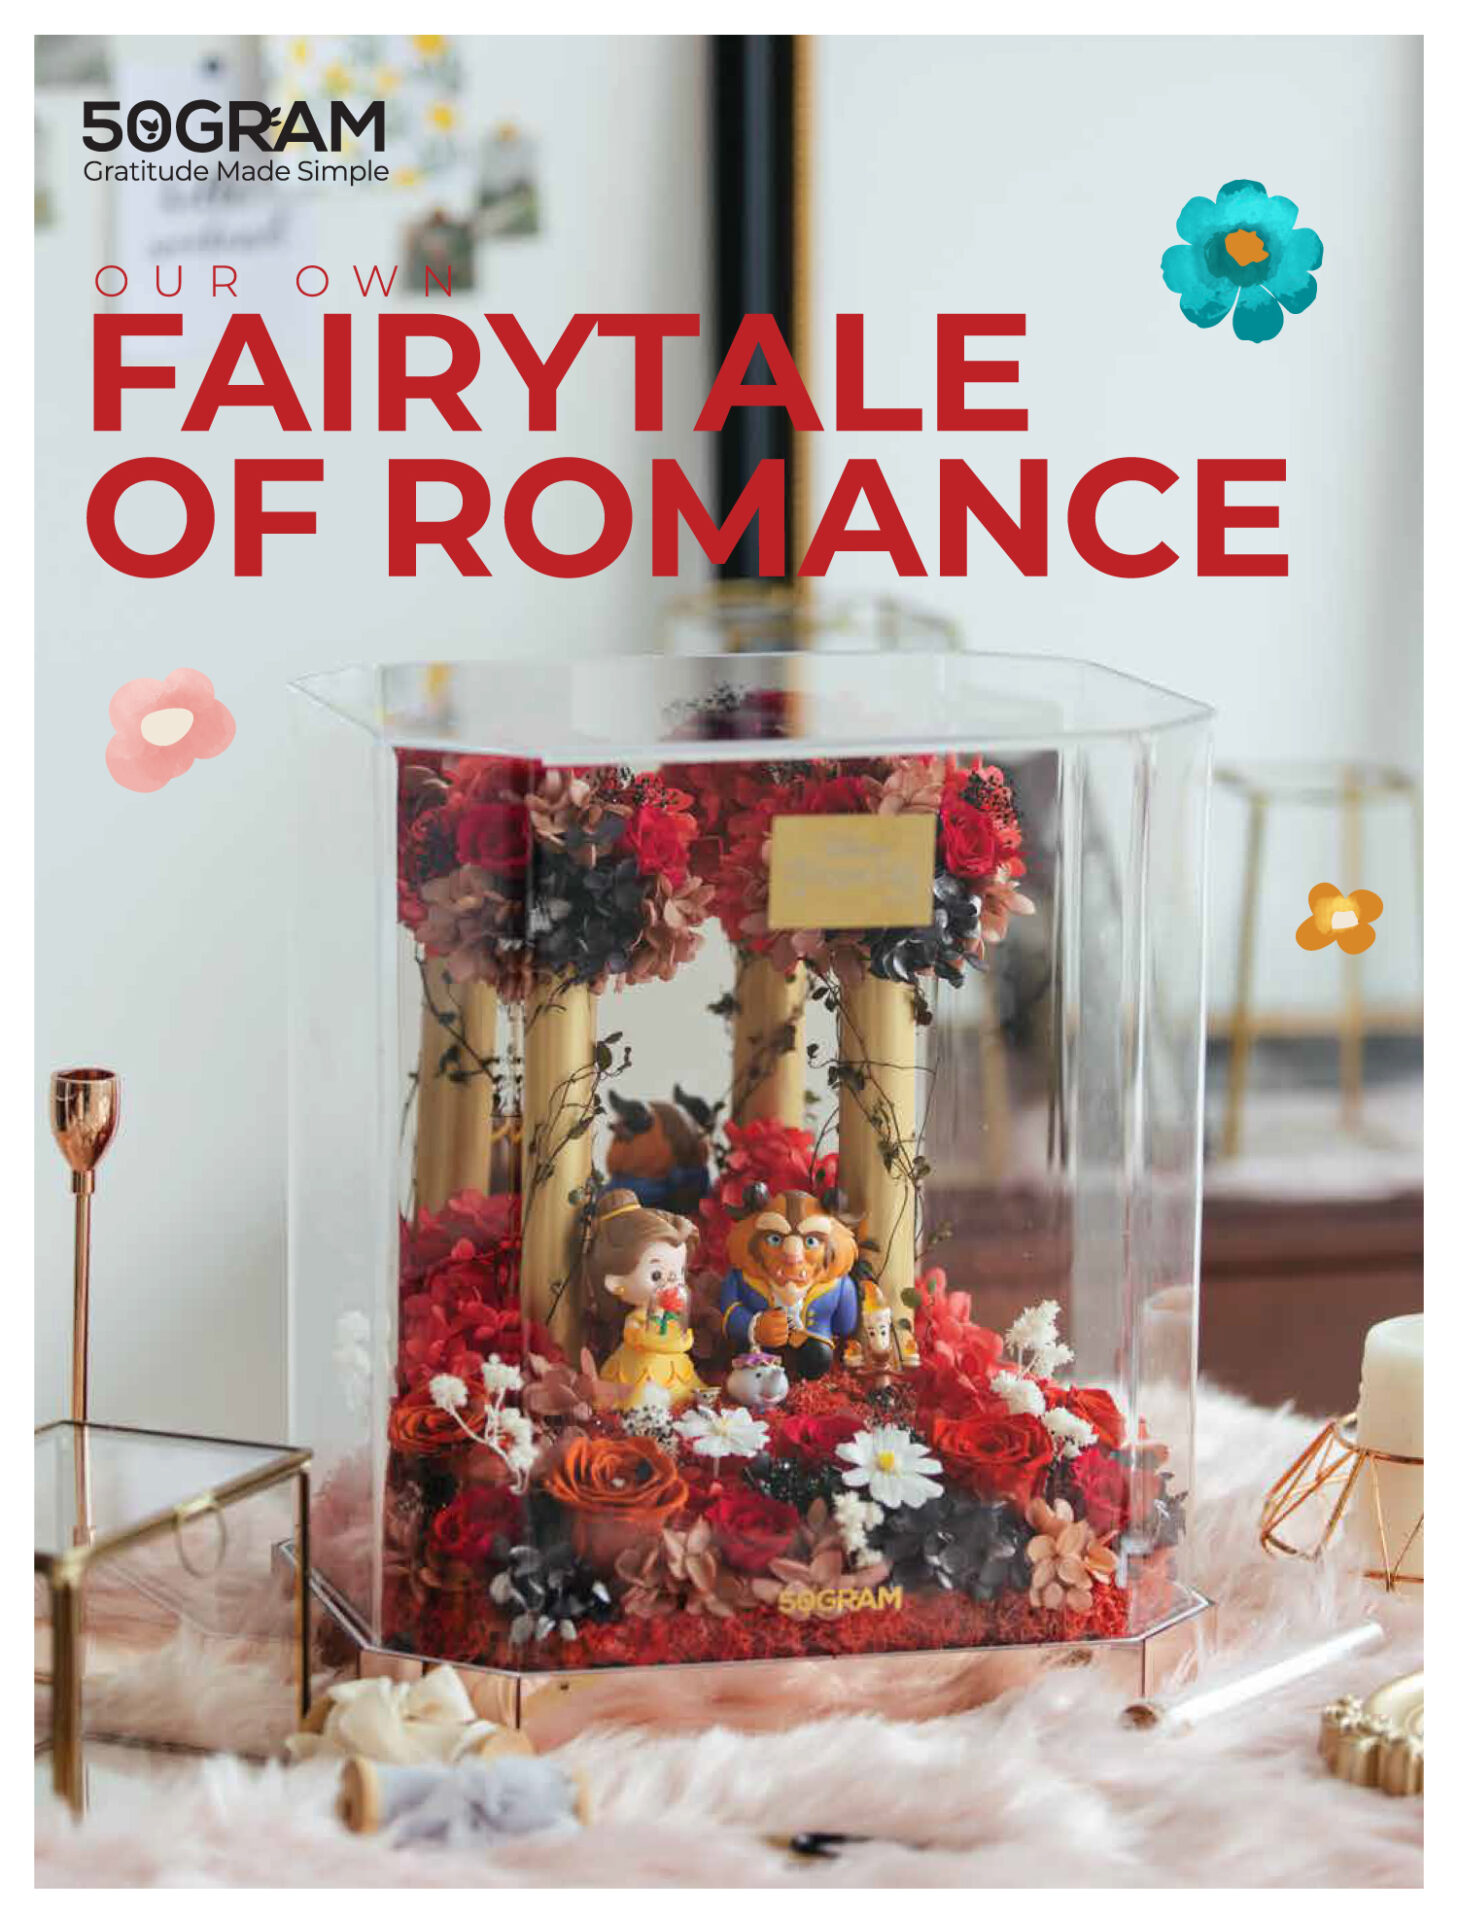 Fairytale of romance